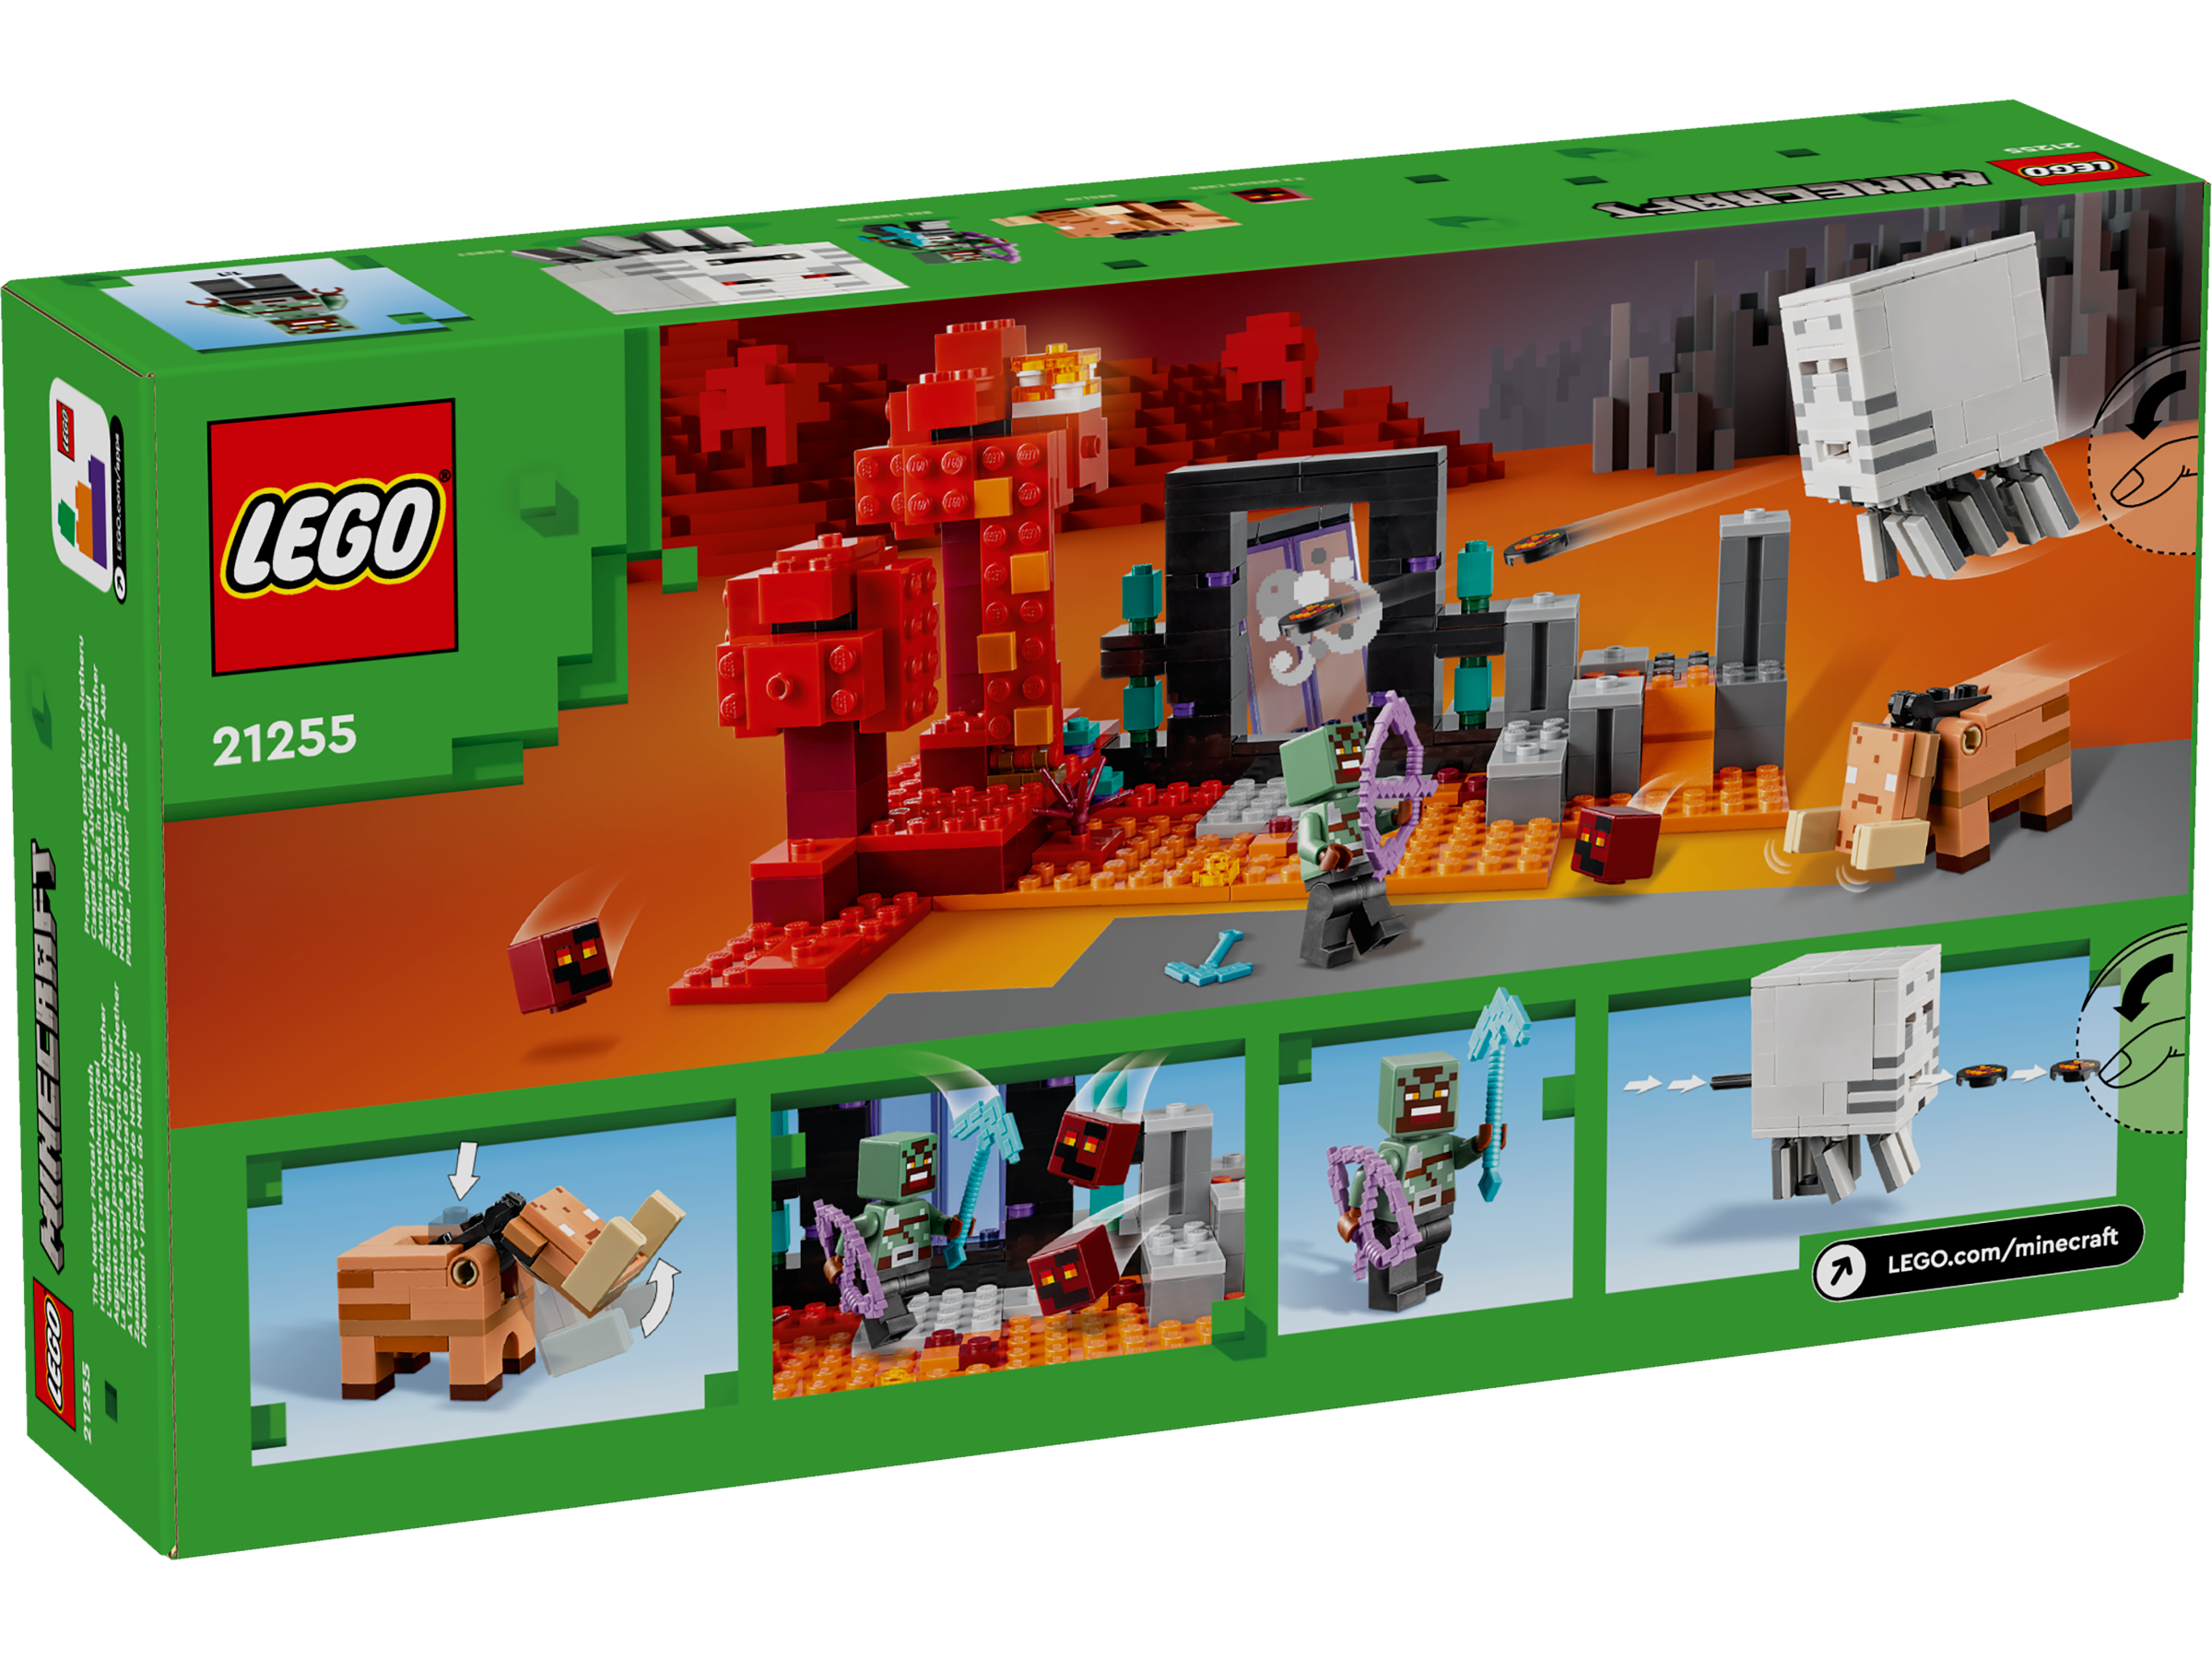 LEGO® Minecraft™ 21255 Hinterhalt am Netherportal